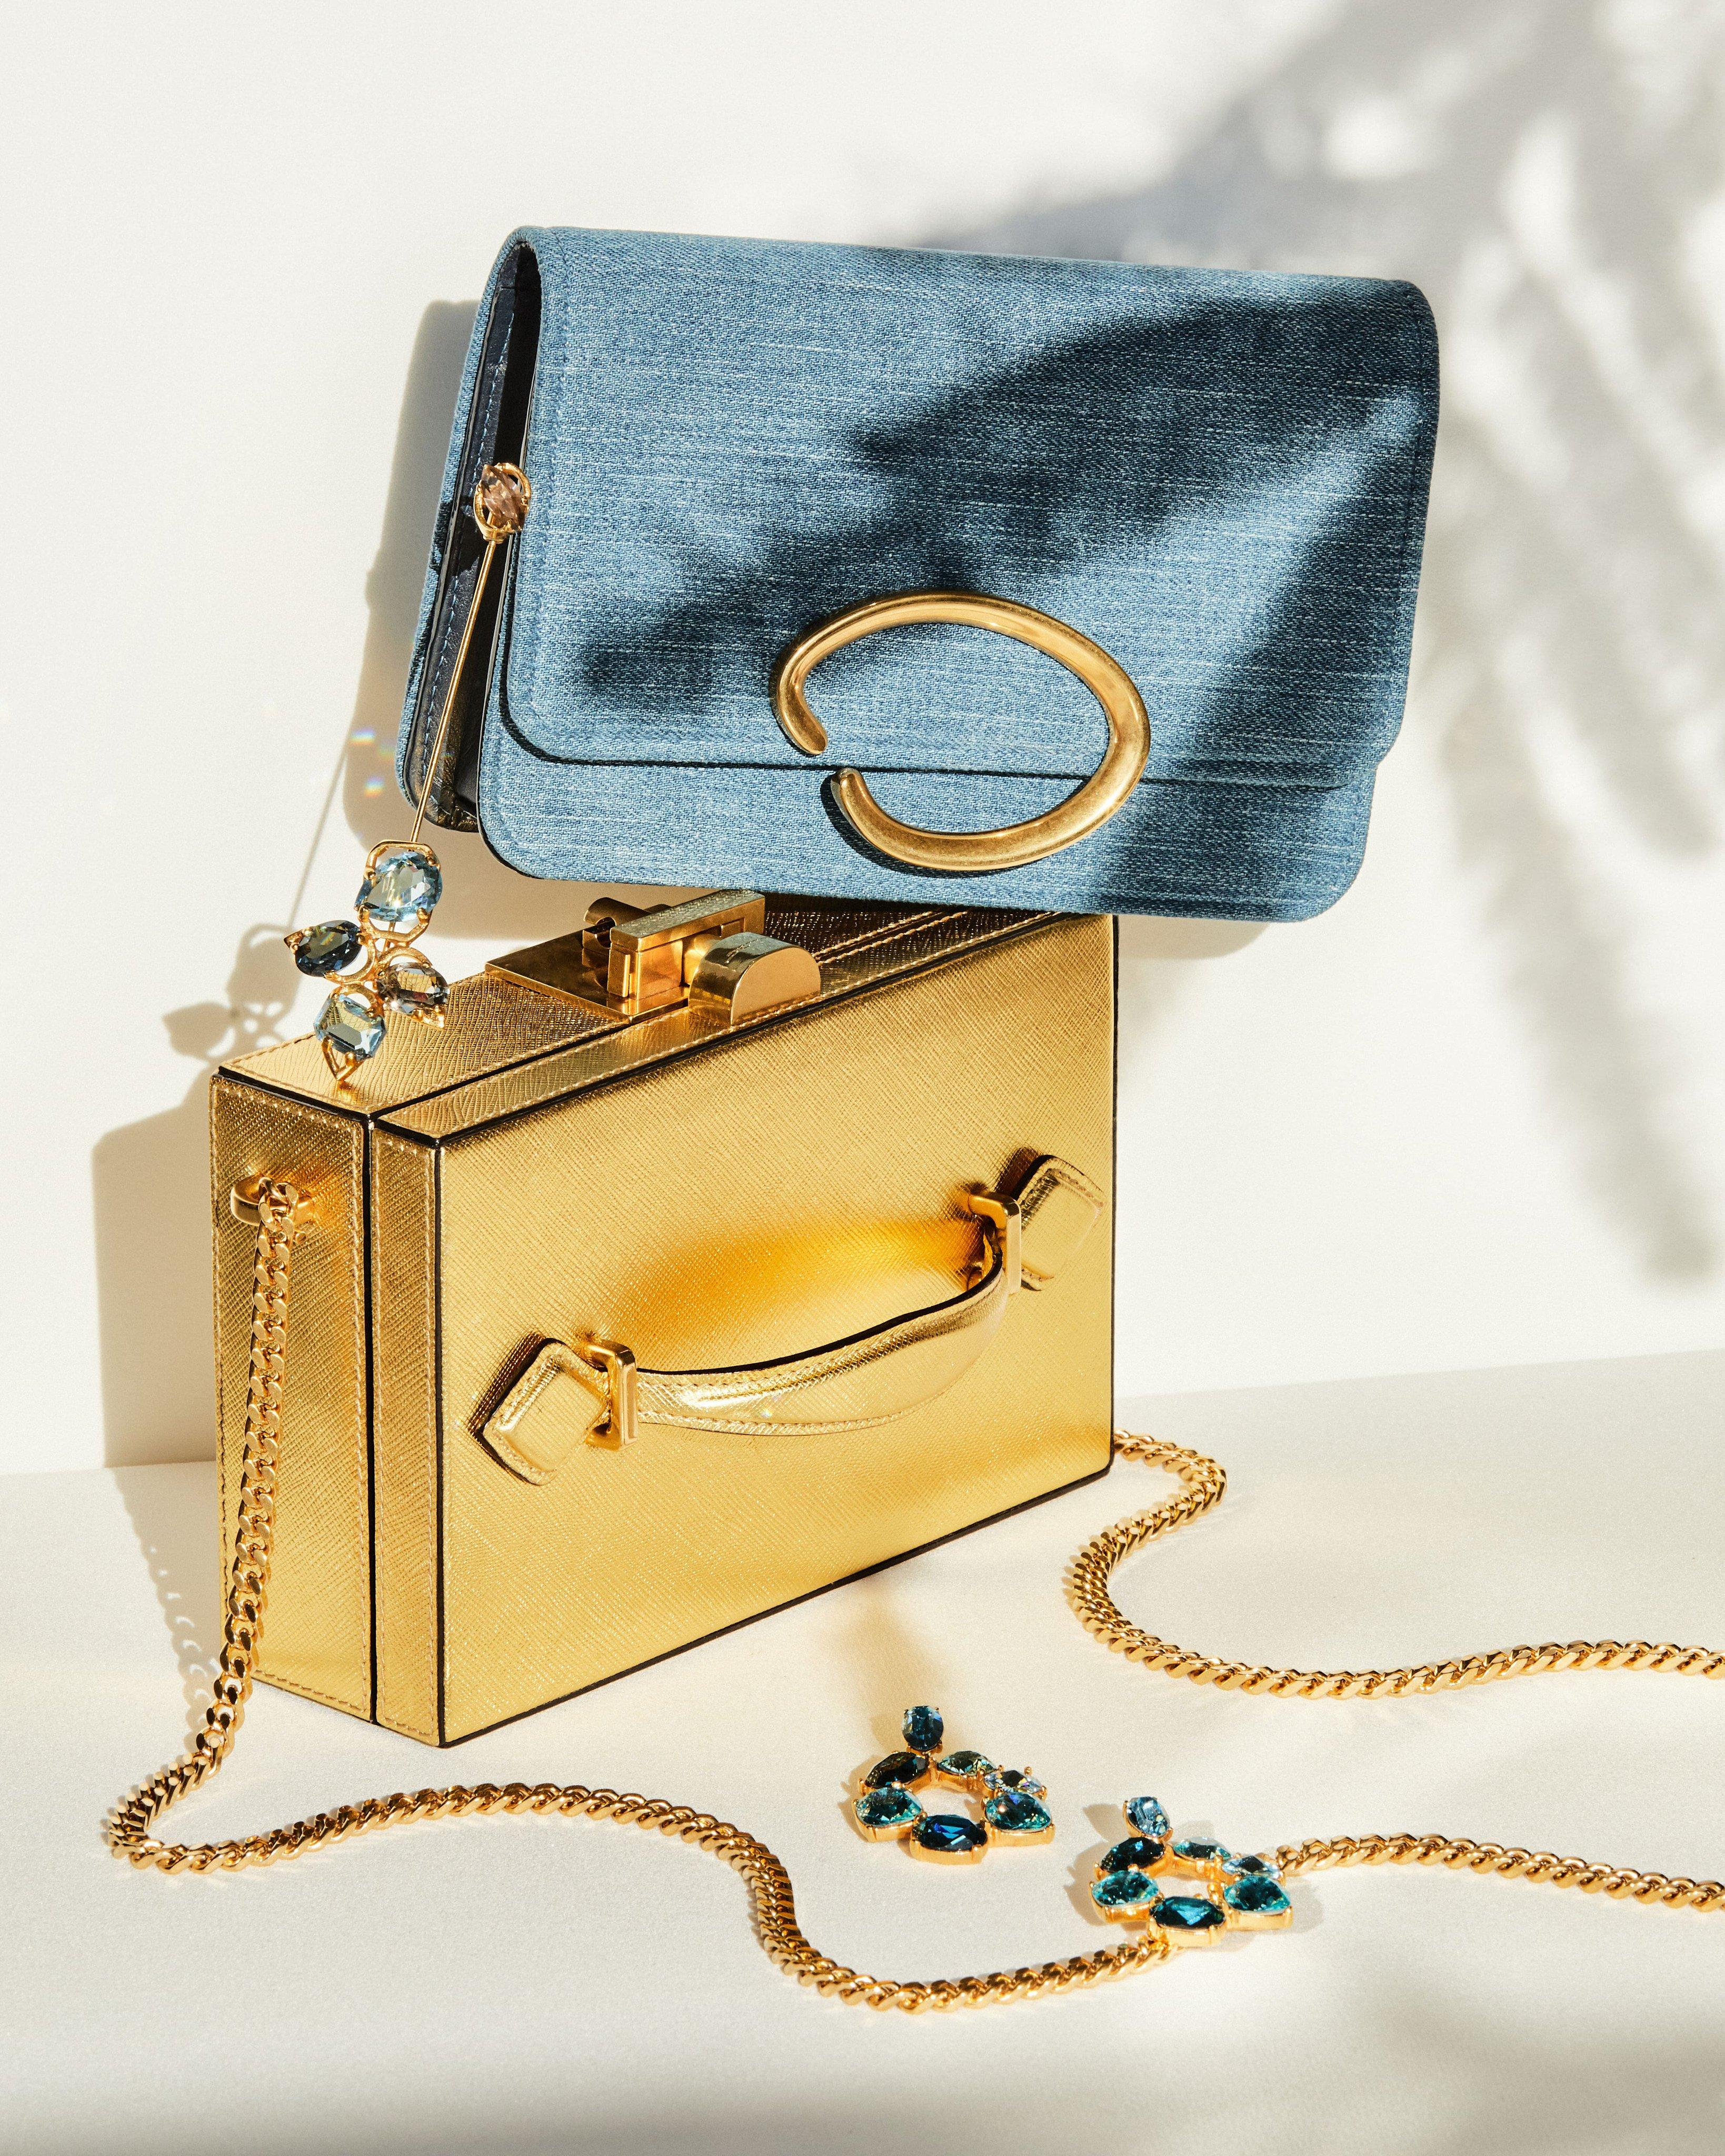 New Rare Oscar De La Renta 2020 Gold Alibi Minaudière Bag With Box & Tags $1890 13